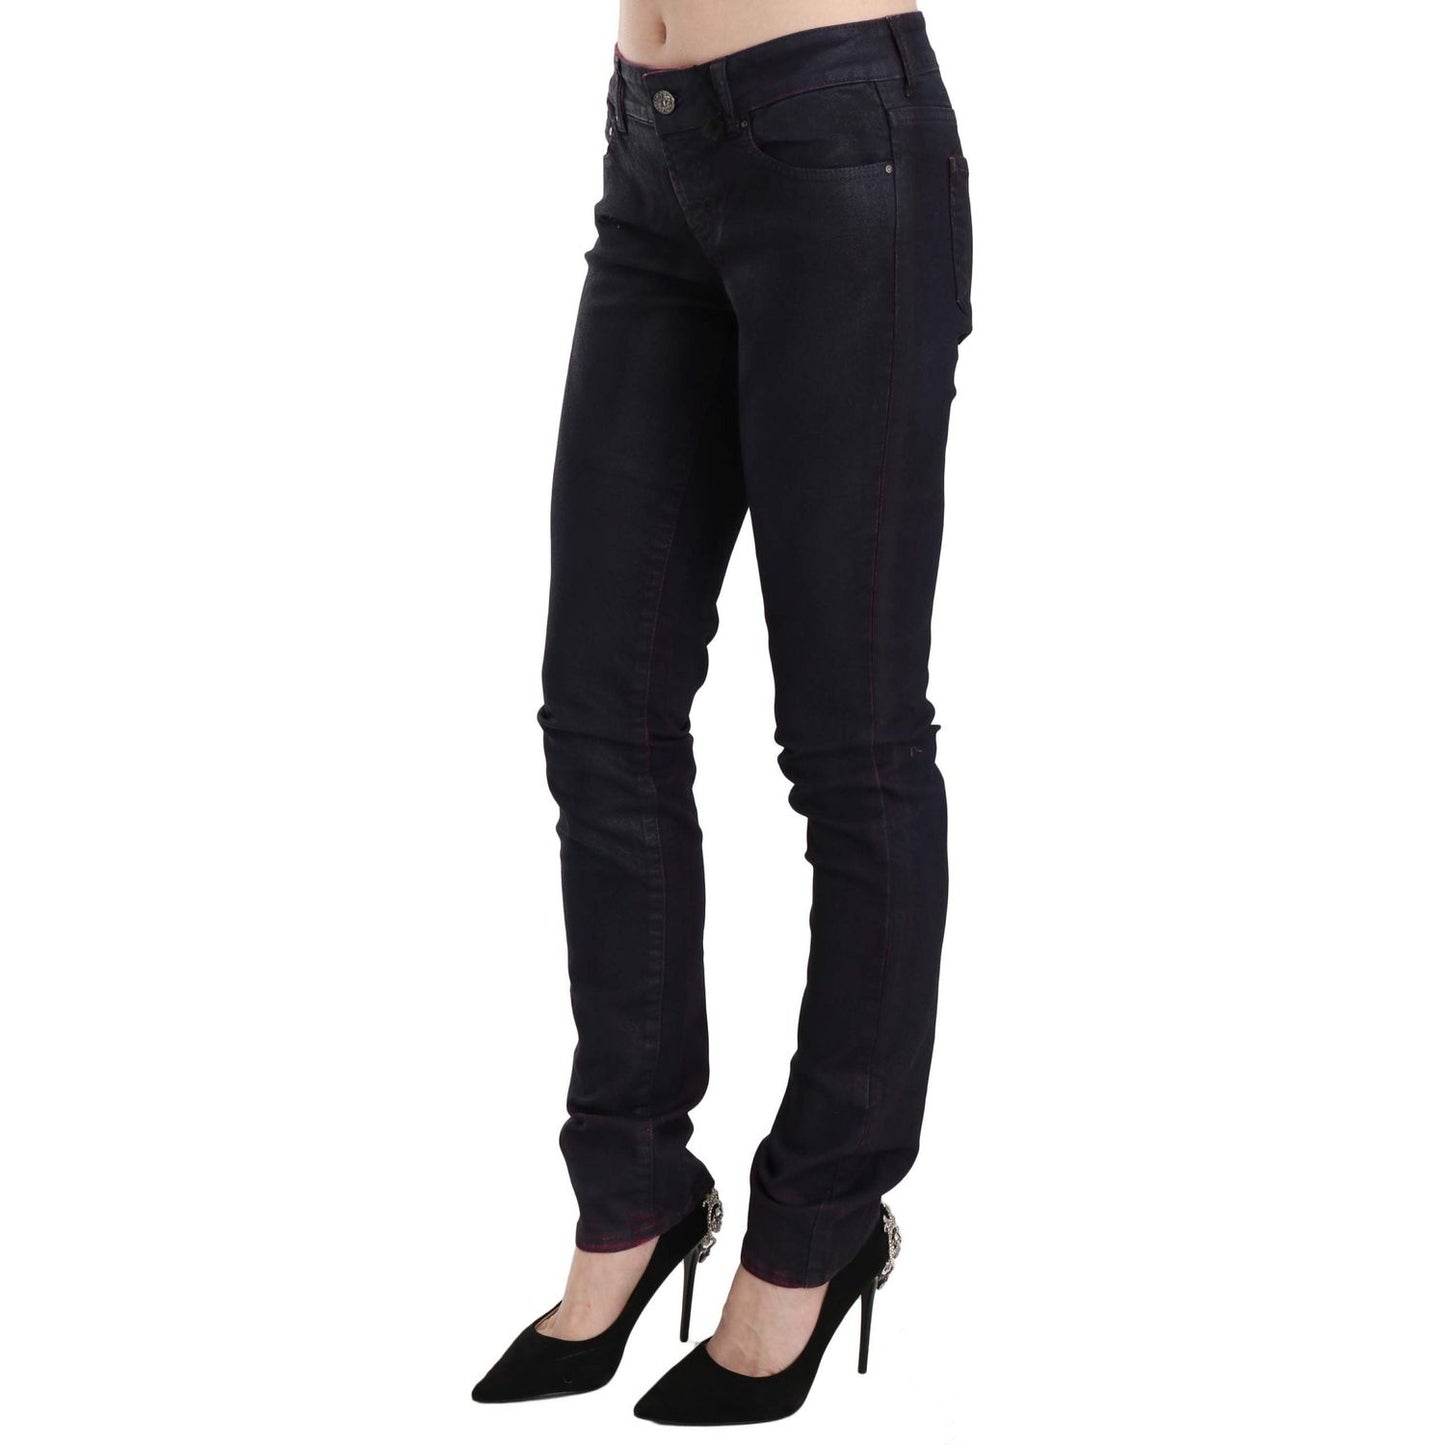 Just Cavalli Chic Black Low Waist Skinny Denim black-cotton-low-waist-skinny-denim-pants Jeans & Pants